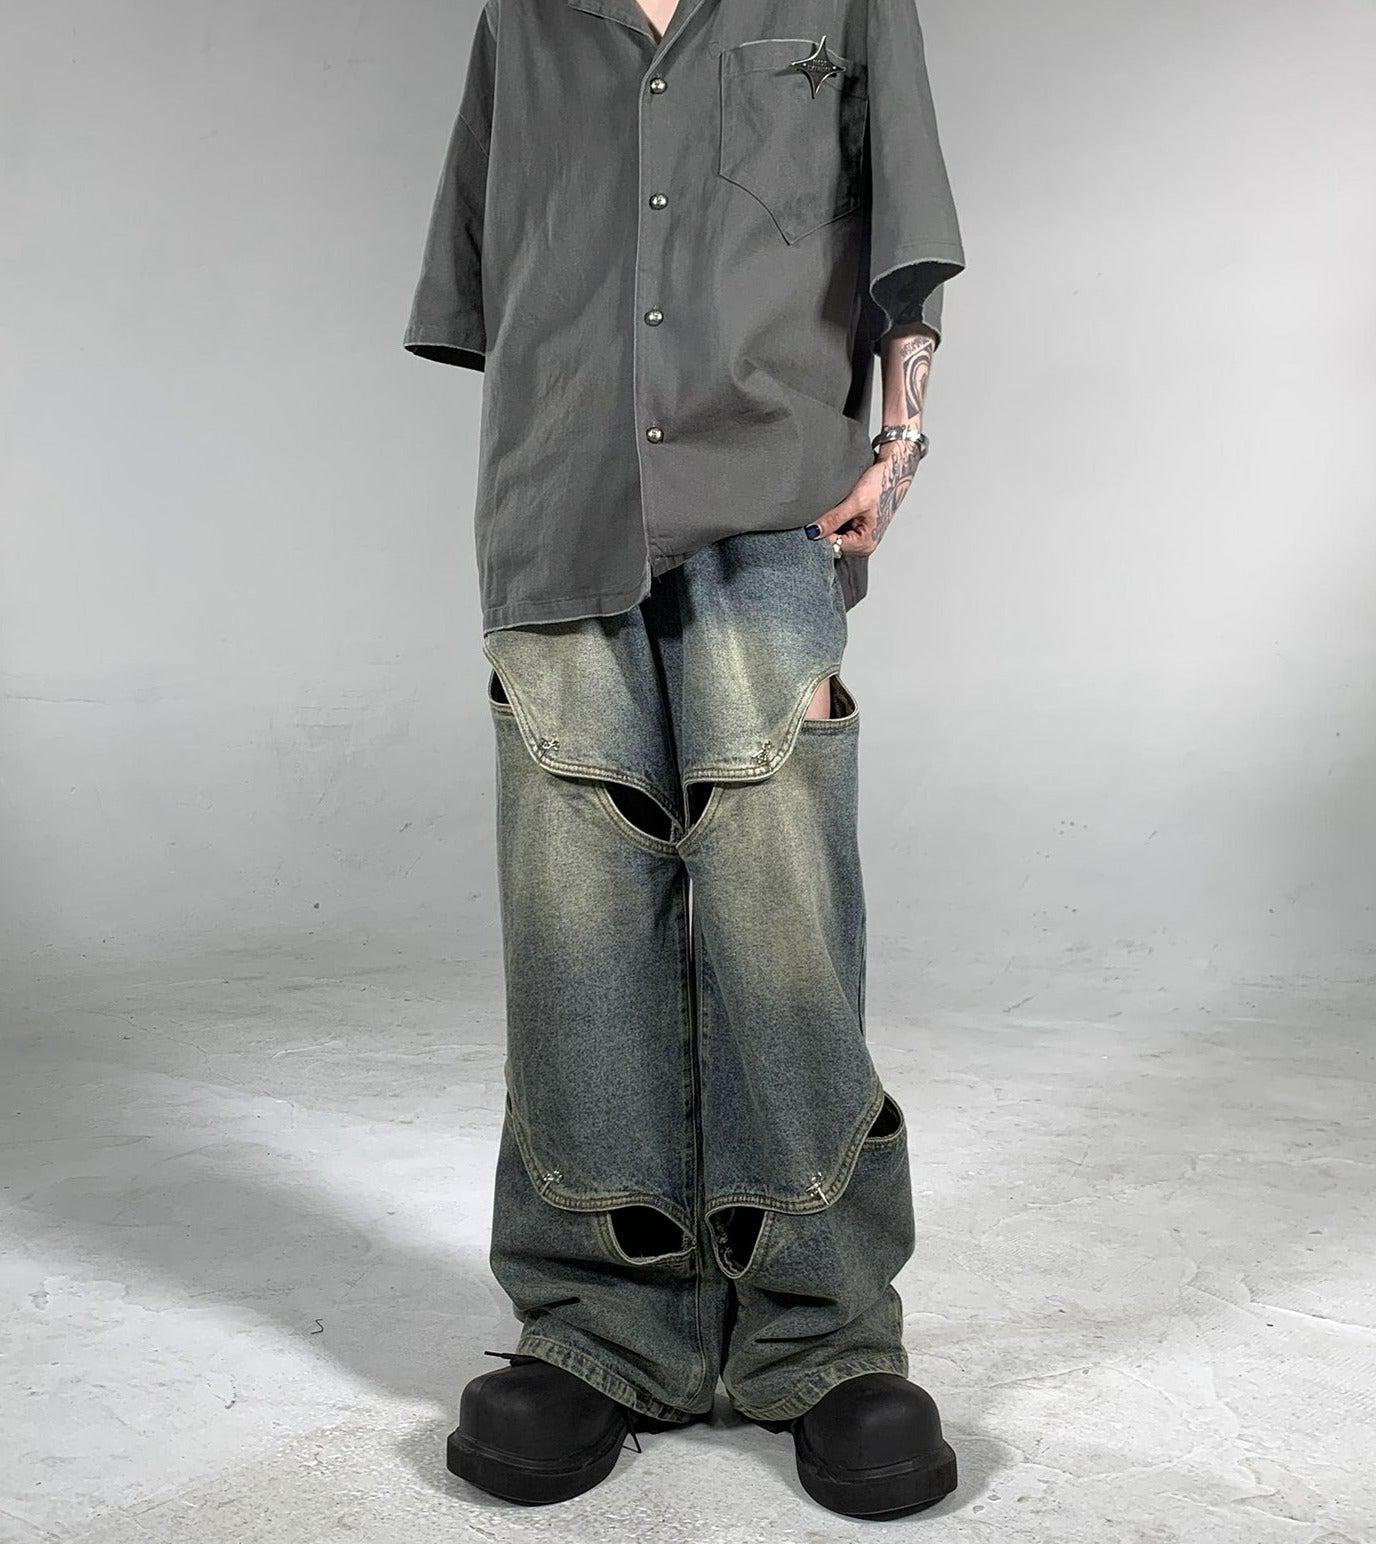 Ash Dark Metal Buckle Irregular Style Jeans Korean Street Fashion Jeans By Ash Dark Shop Online at OH Vault